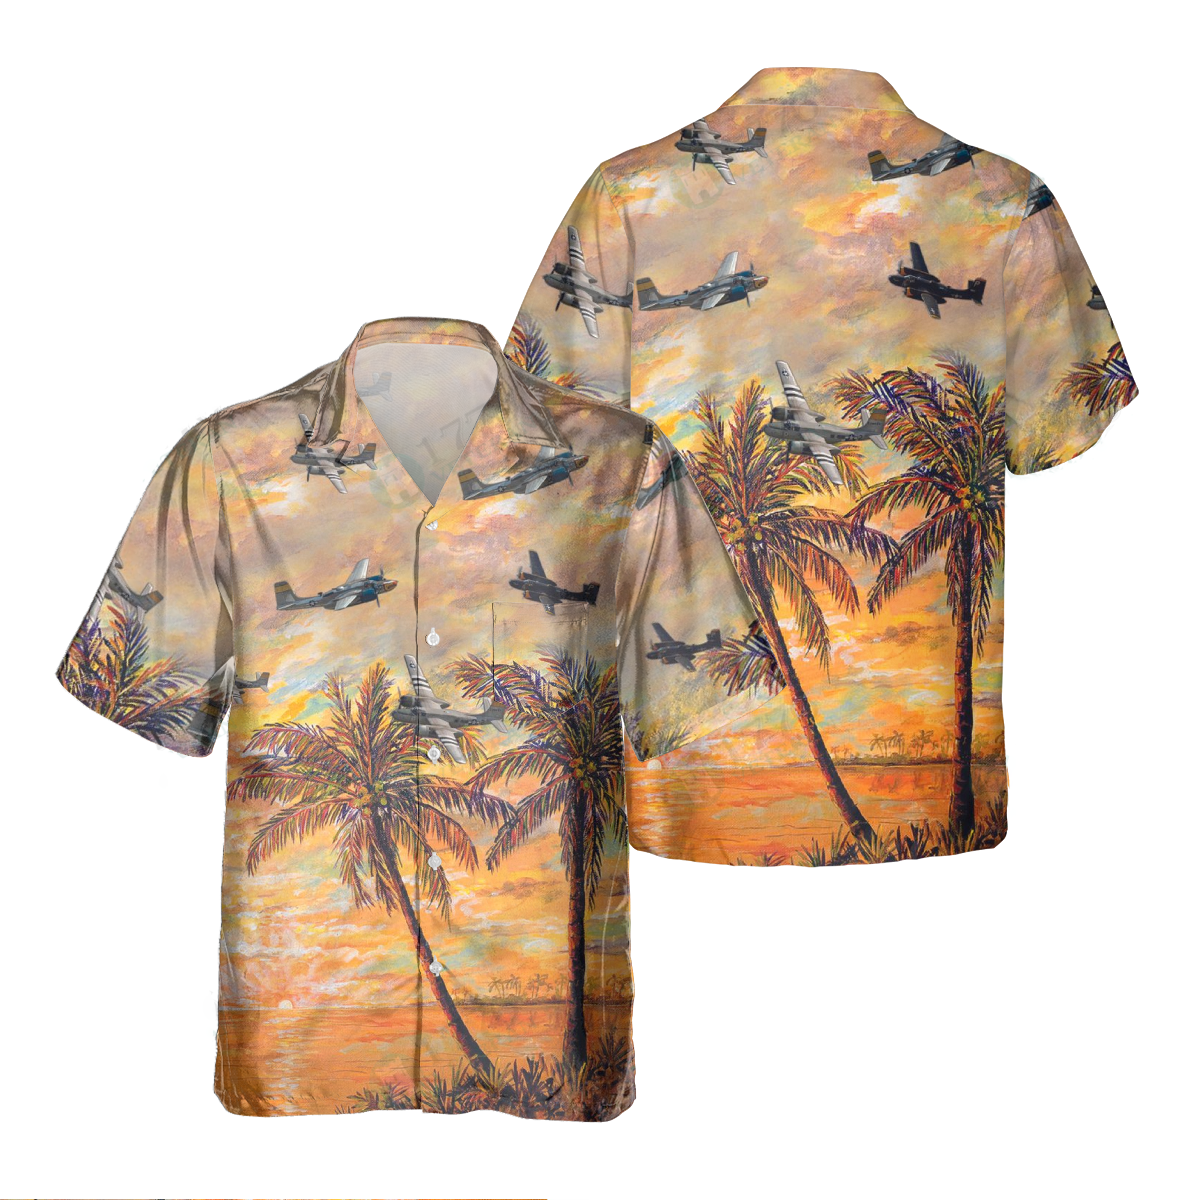 A-26 Invader Pocket Hawaiian Shirt C1/ Hawaiian Shirt for Men Dad Veteran/ Patriot Day